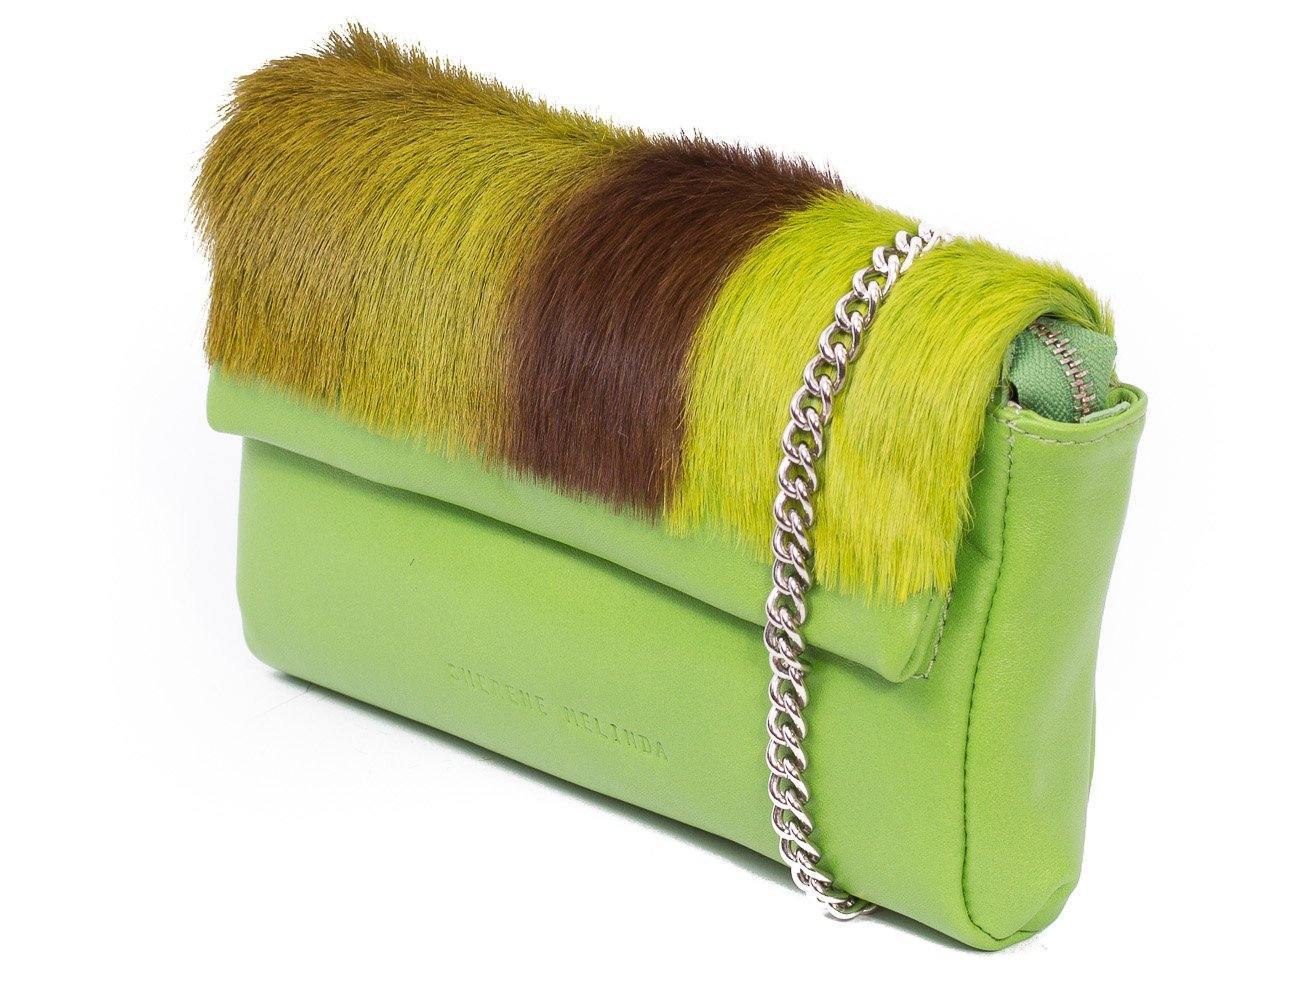 sherene melinda springbok hair-on-hide lime green leather Sophy SS18 Clutch Bag Stripe side angle strap